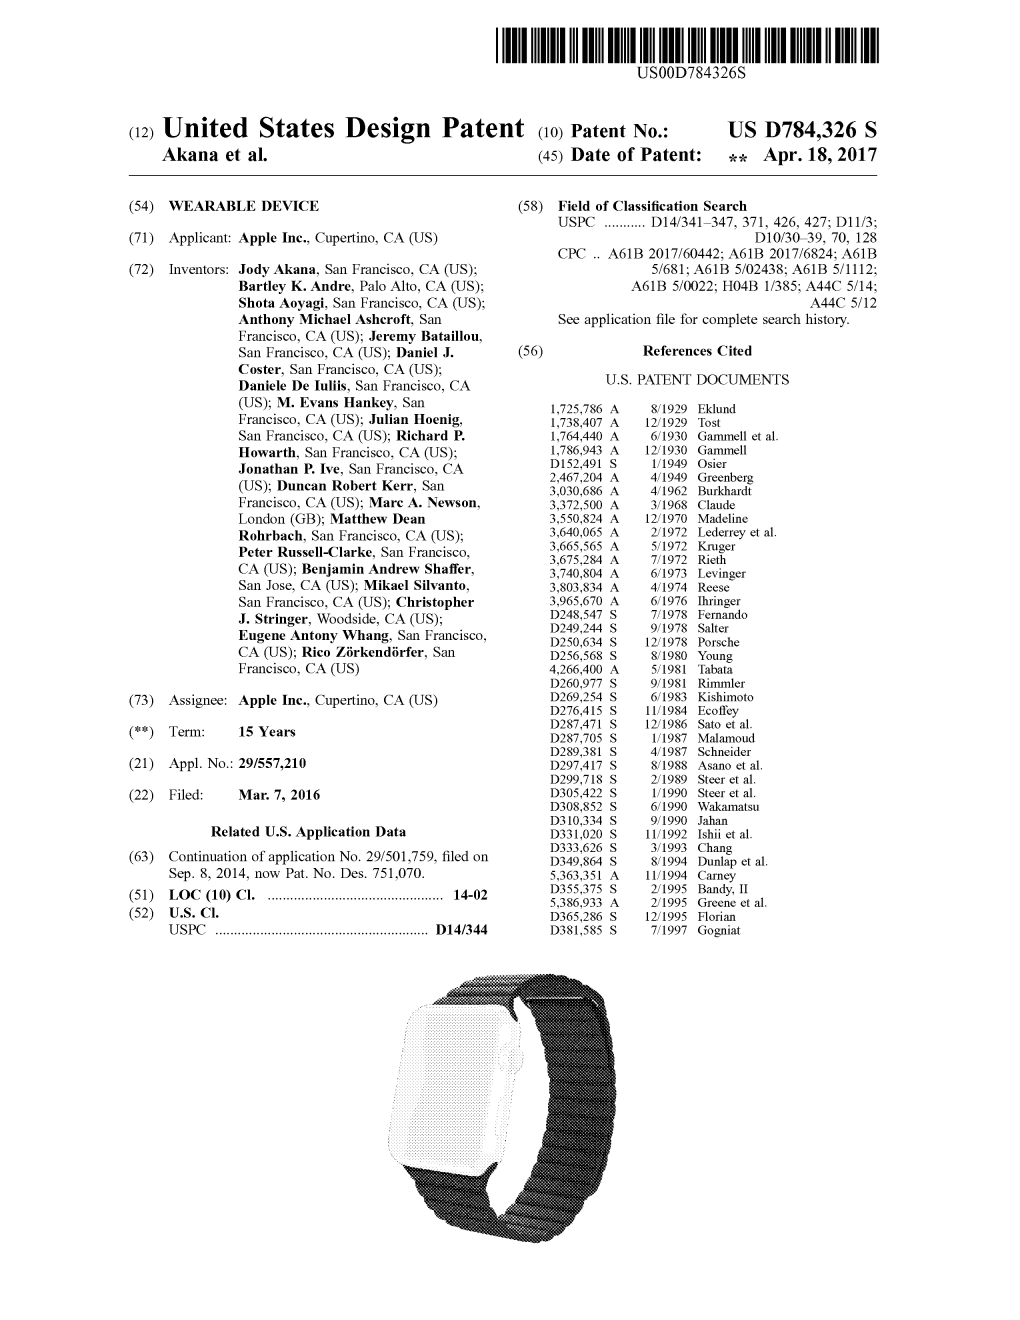 (12) United States Design Patent (10) Patent No.: US D784,326 S Akana Et Al